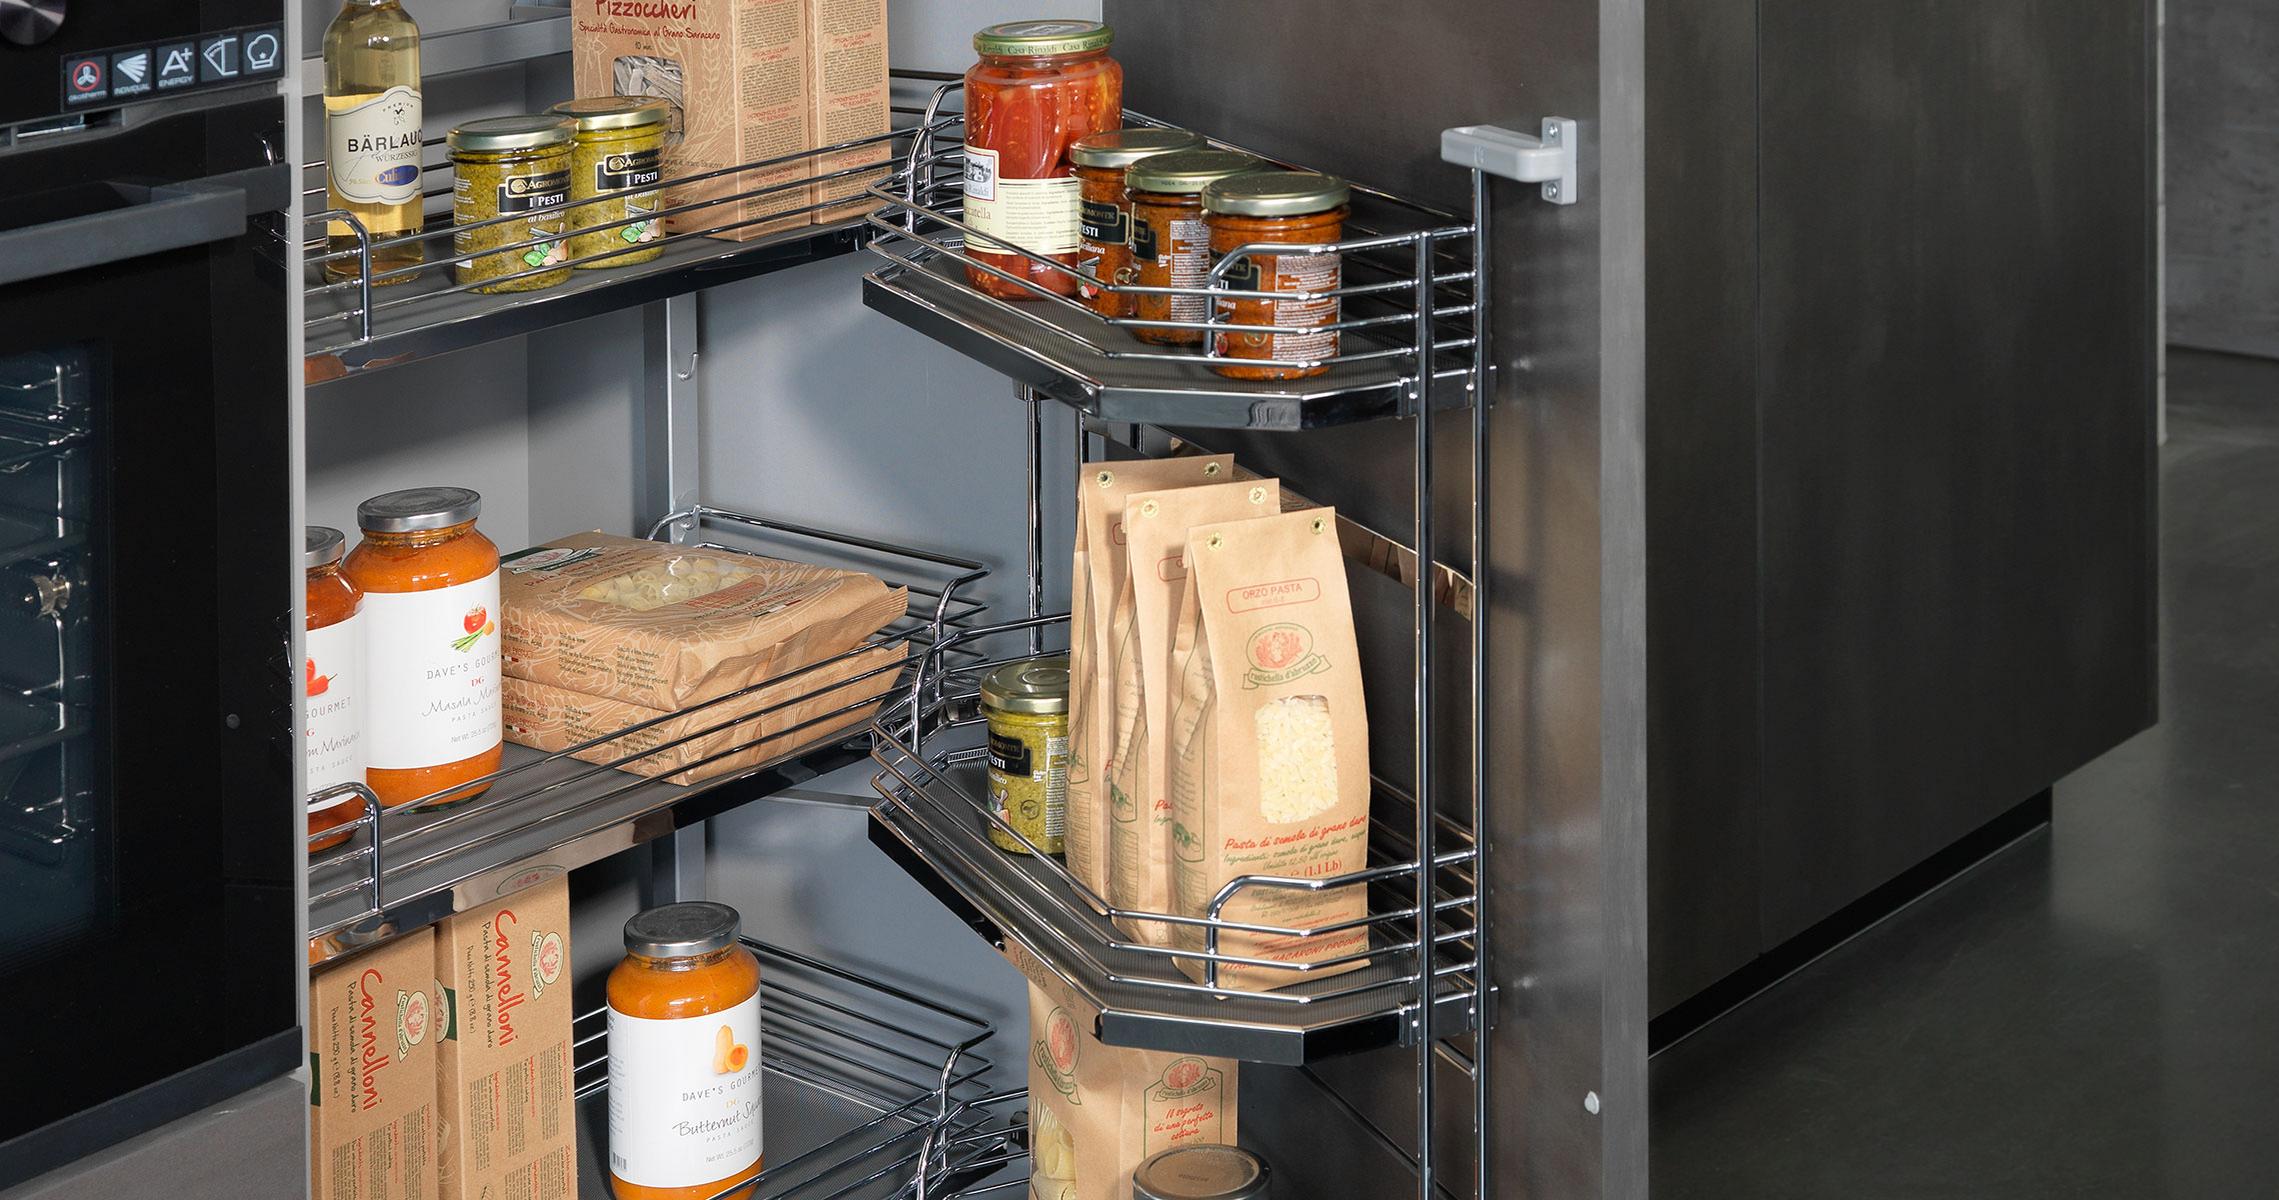 Features Rational Einbauküchen, Retrofit Pull Out Shelves For Pantry